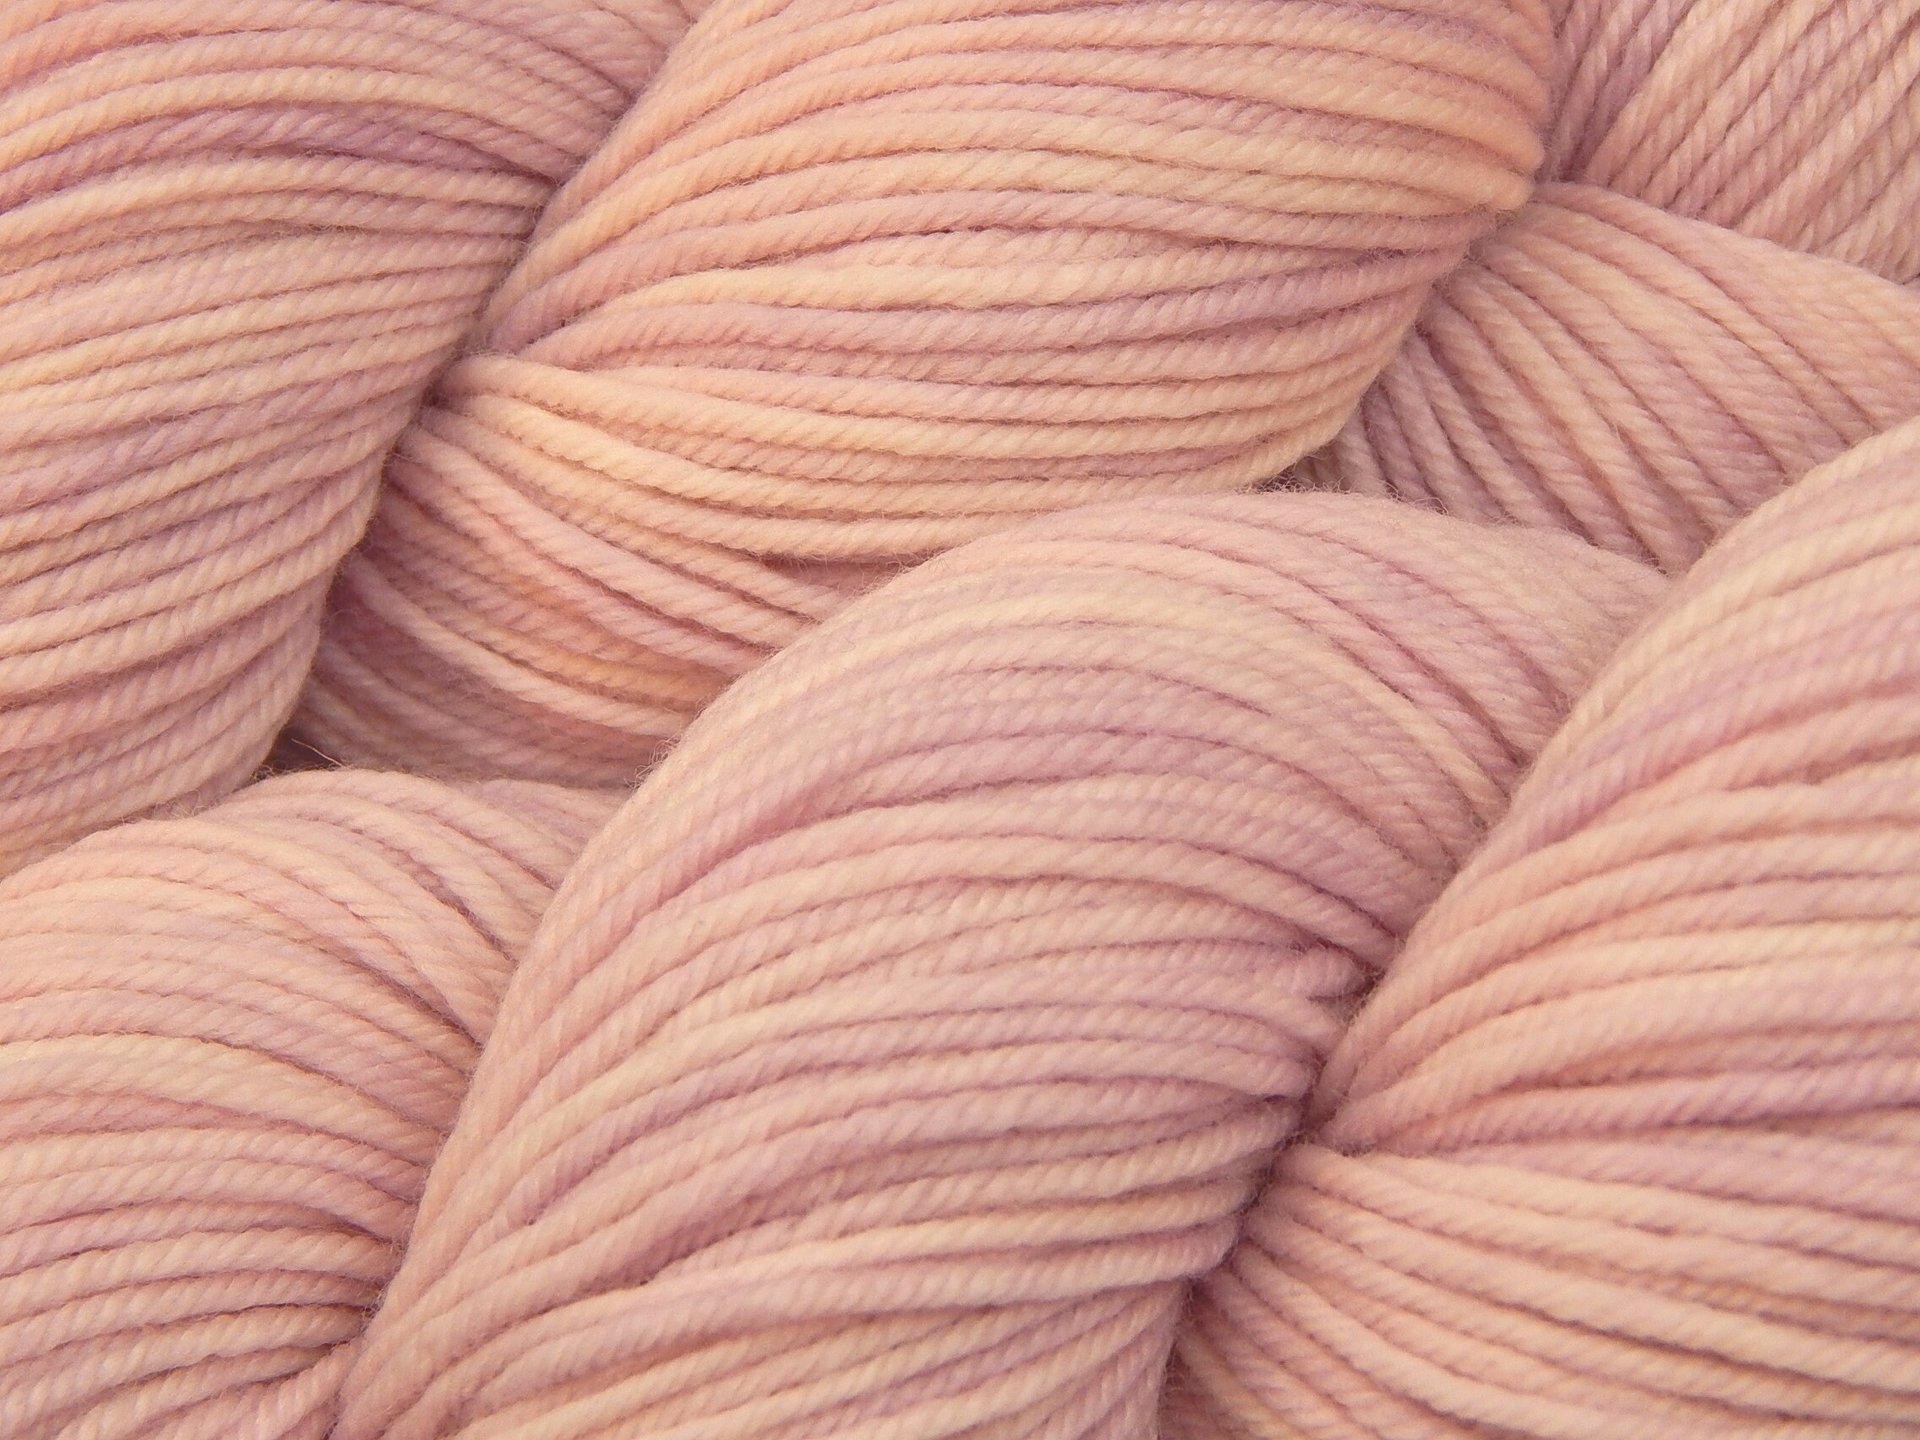 Hand Dyed Yarn, DK Weight Superwash Merino Wool - Petal - Indie Dyed Yarn, Tonal Pale Pink Crochet Yarn, Knitting Supply, Ready to Ship